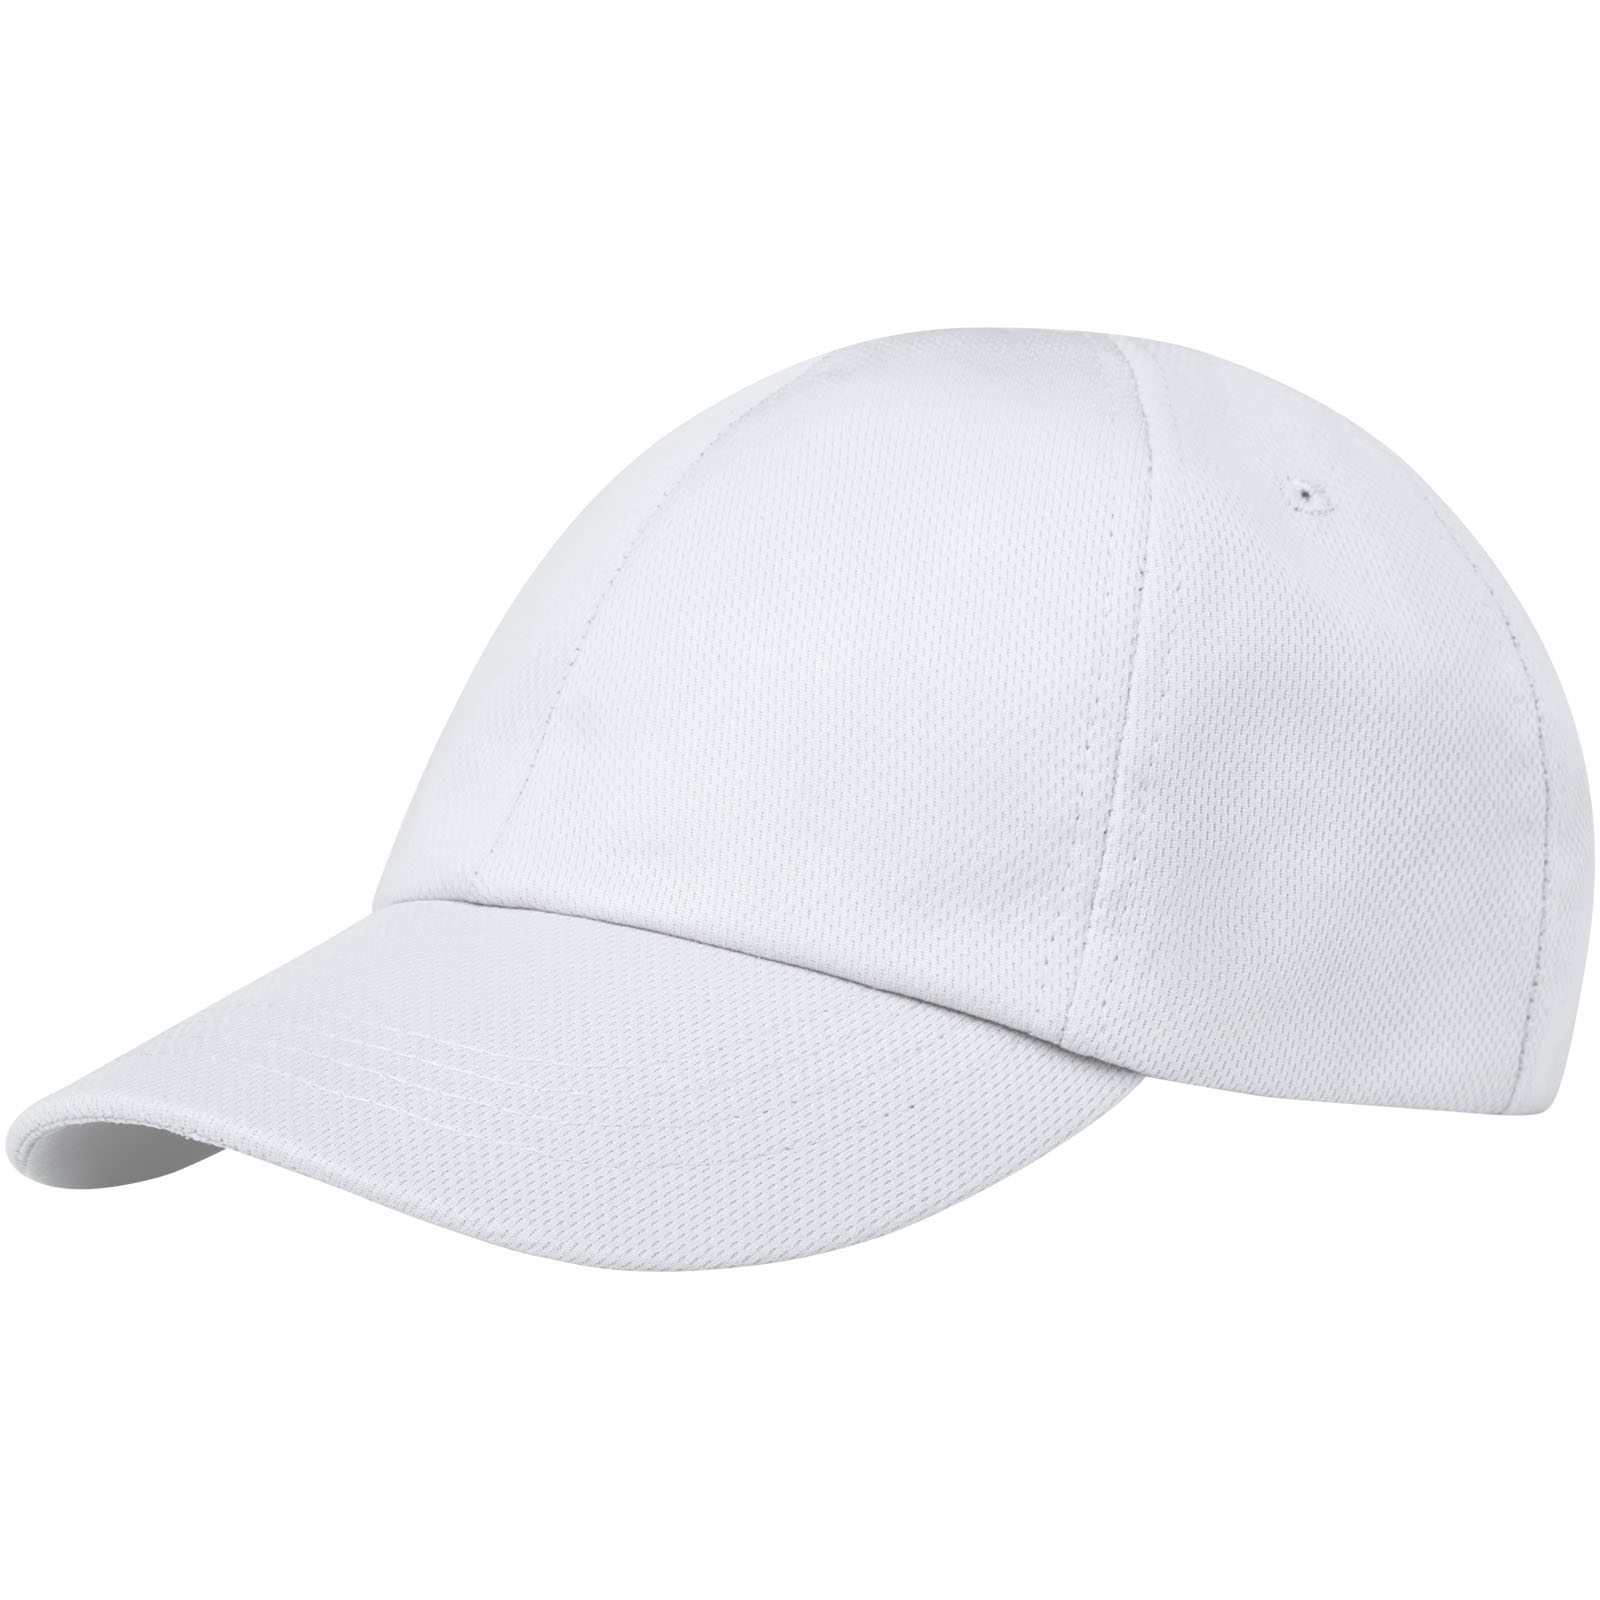 Advertising Caps & Hats - Cerus 6 panel cool fit cap